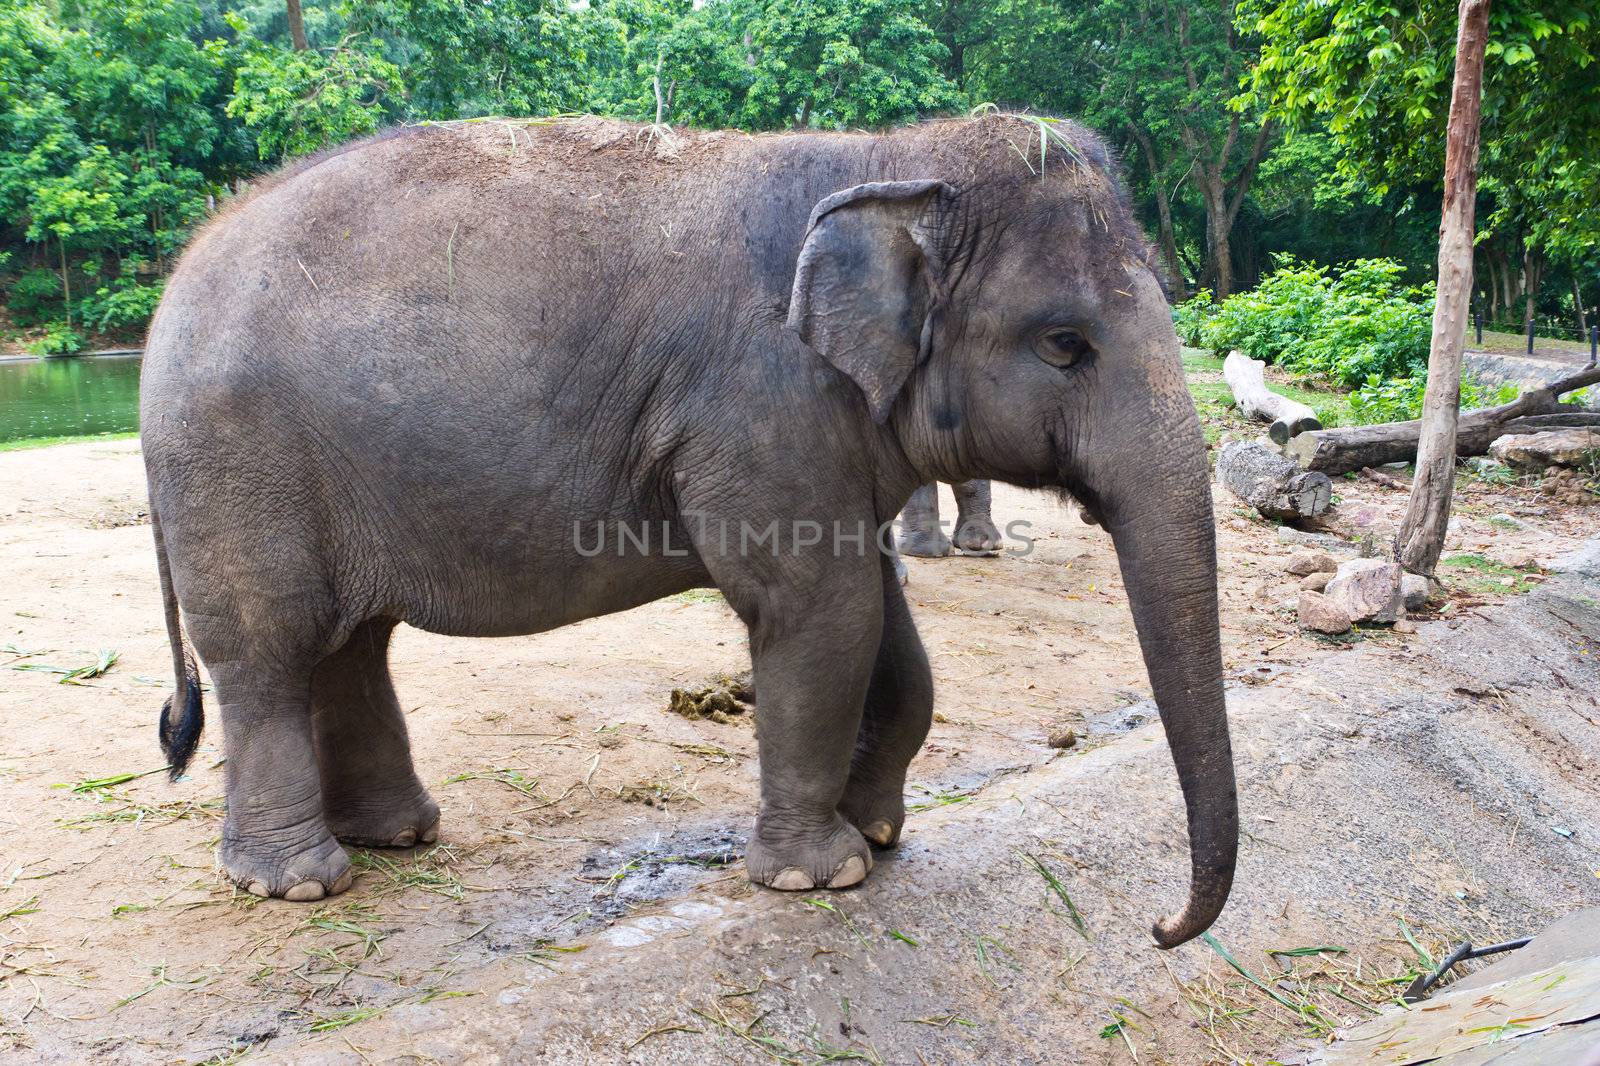 thai elephant by tungphoto